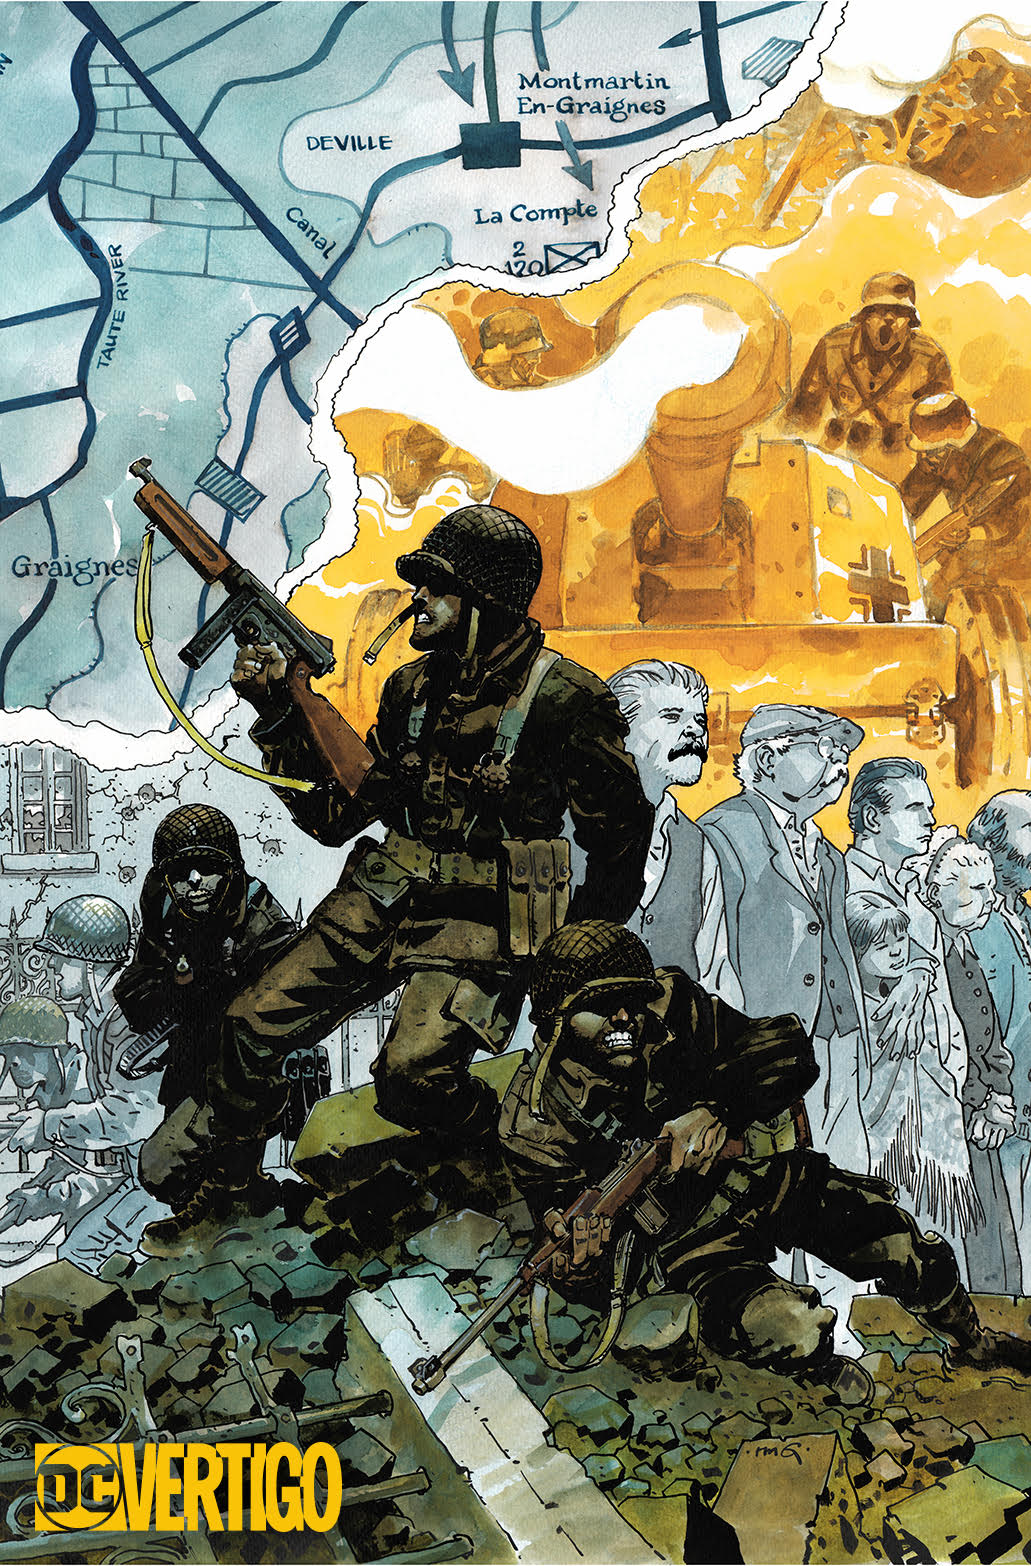 Talking DC Vertigo's WWII graphic novel 'Six Days' with writer Robert Venditti